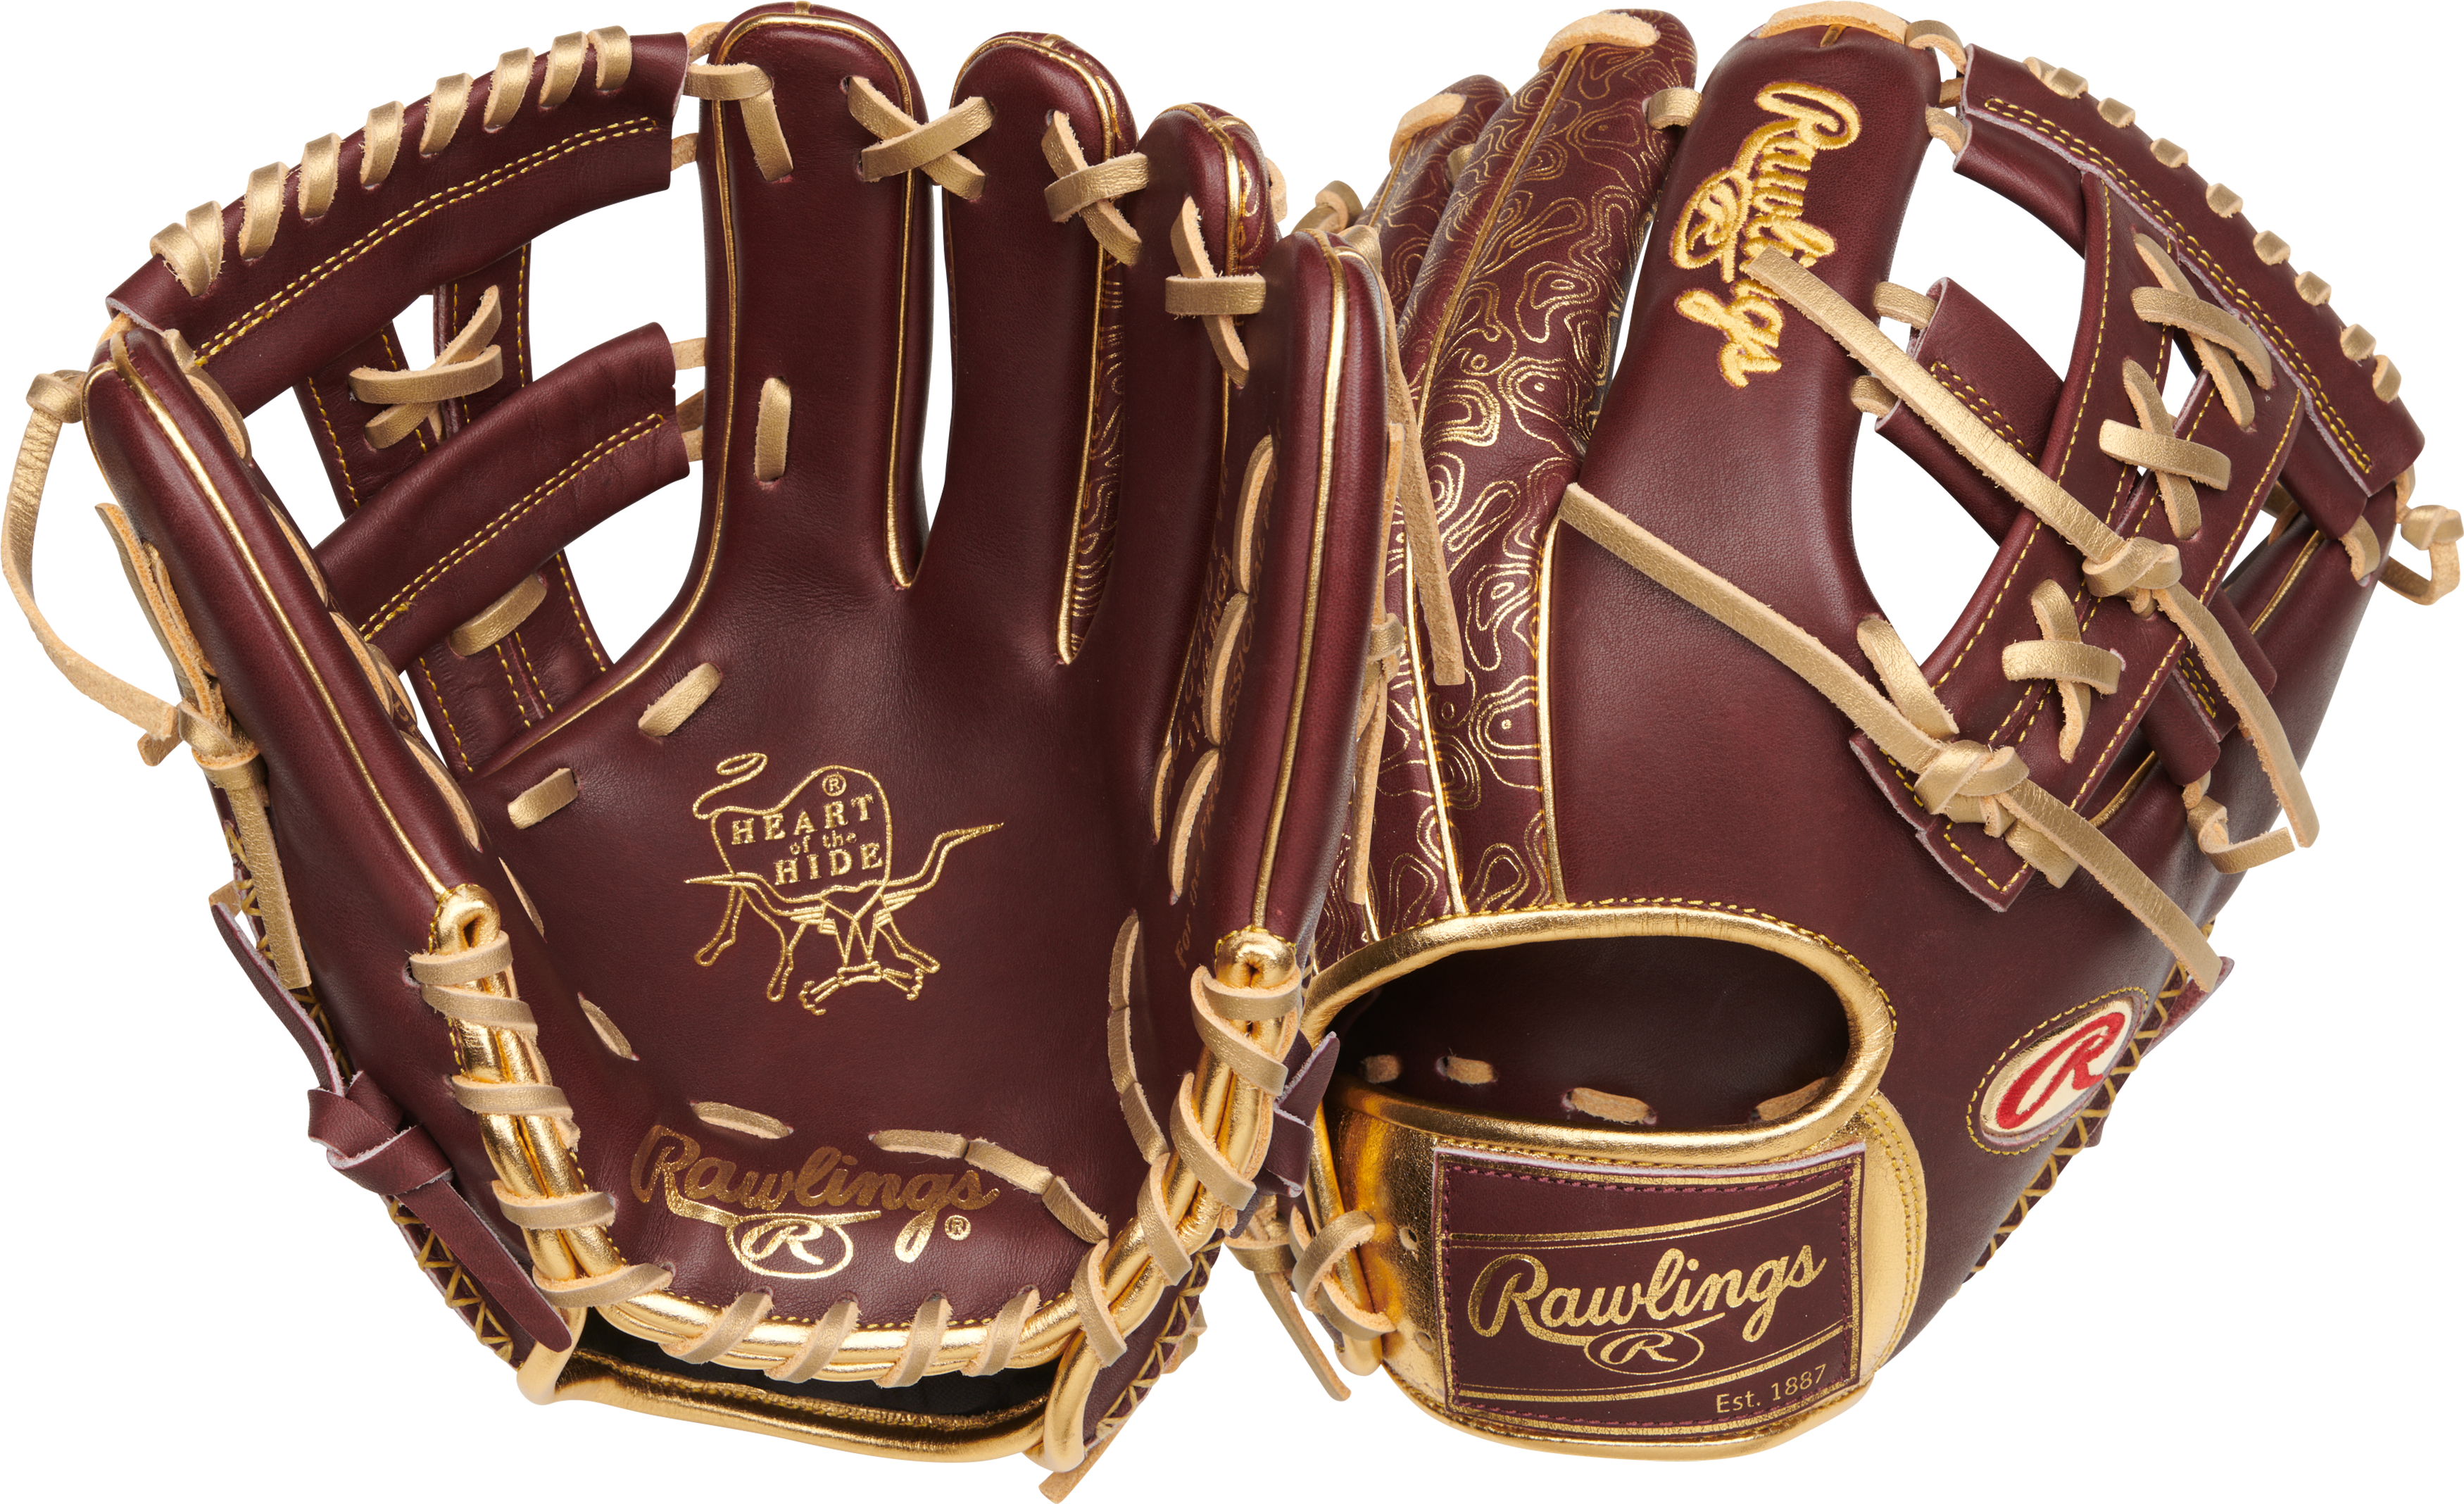 Rawlings June 2023 Gold Glove Club (GOTM) Goldy 11.75-inch Infield Glove